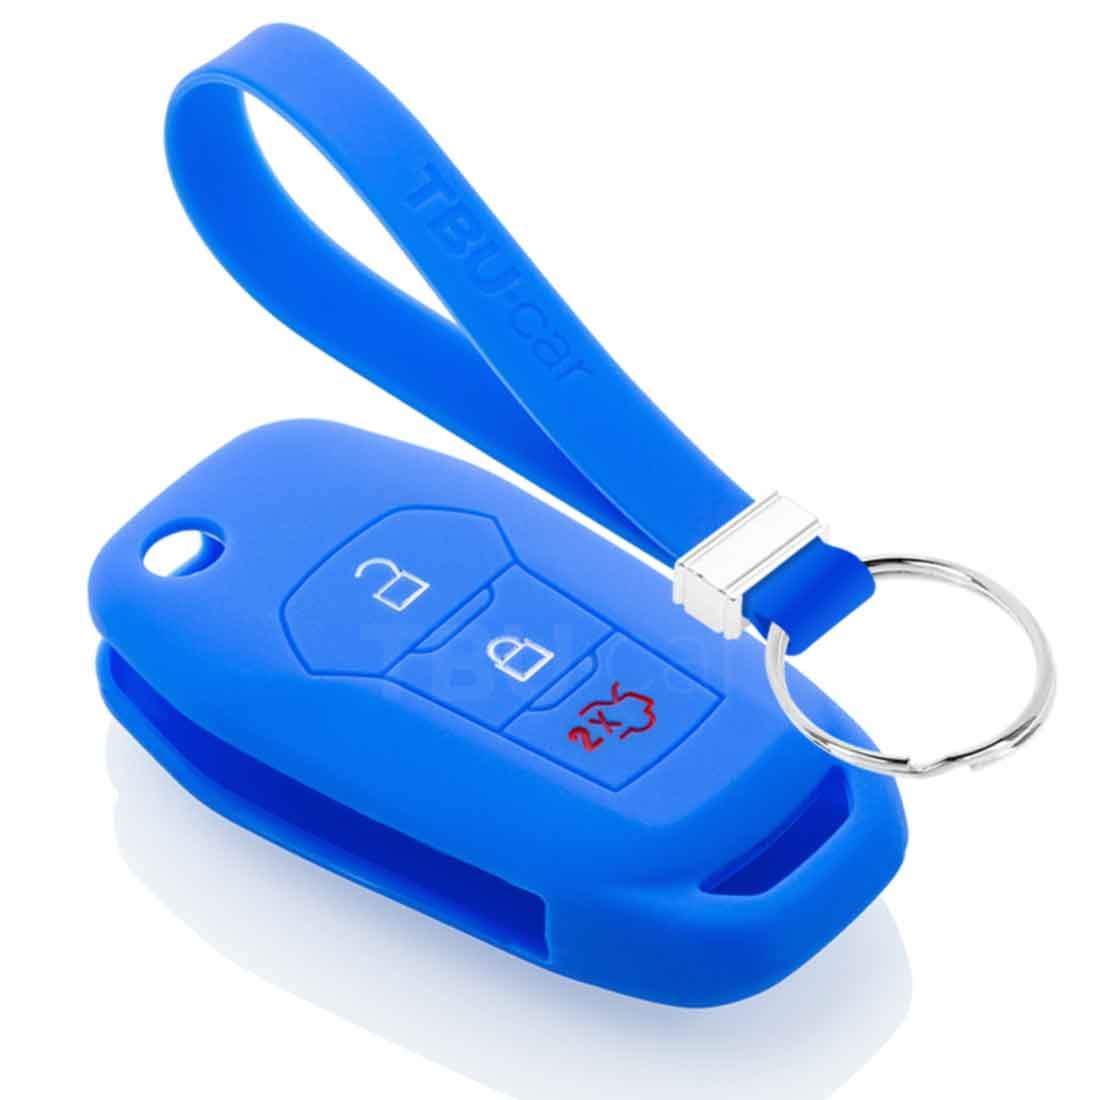 TBU car TBU car Sleutel cover compatibel met Ford - Silicone sleutelhoesje - beschermhoesje autosleutel - Blauw